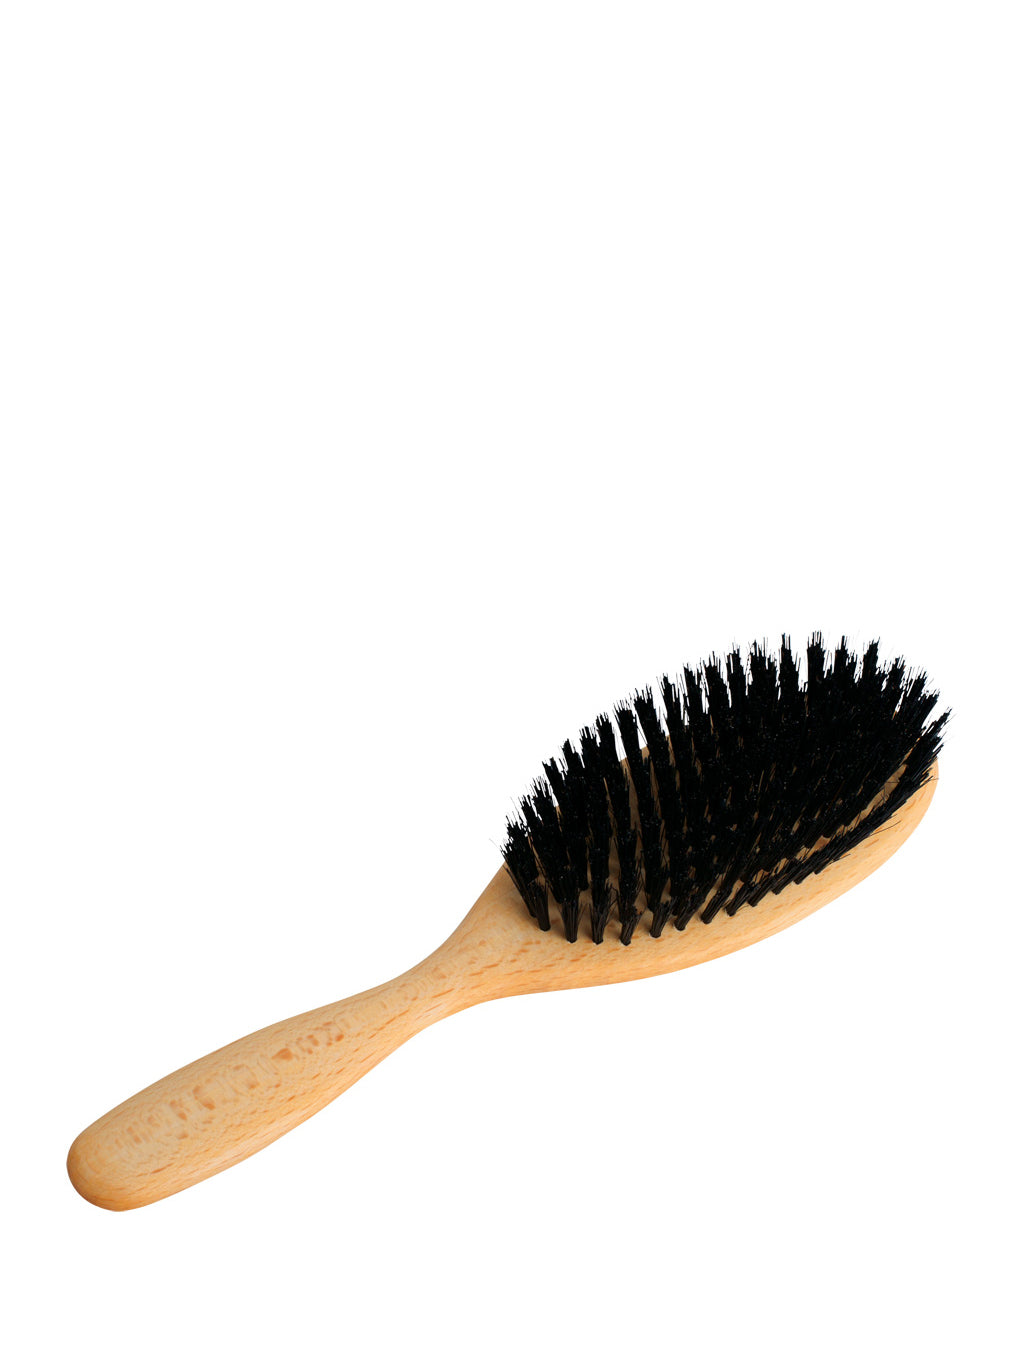 Wooden hairbrush for long & fine hair, boar bristle